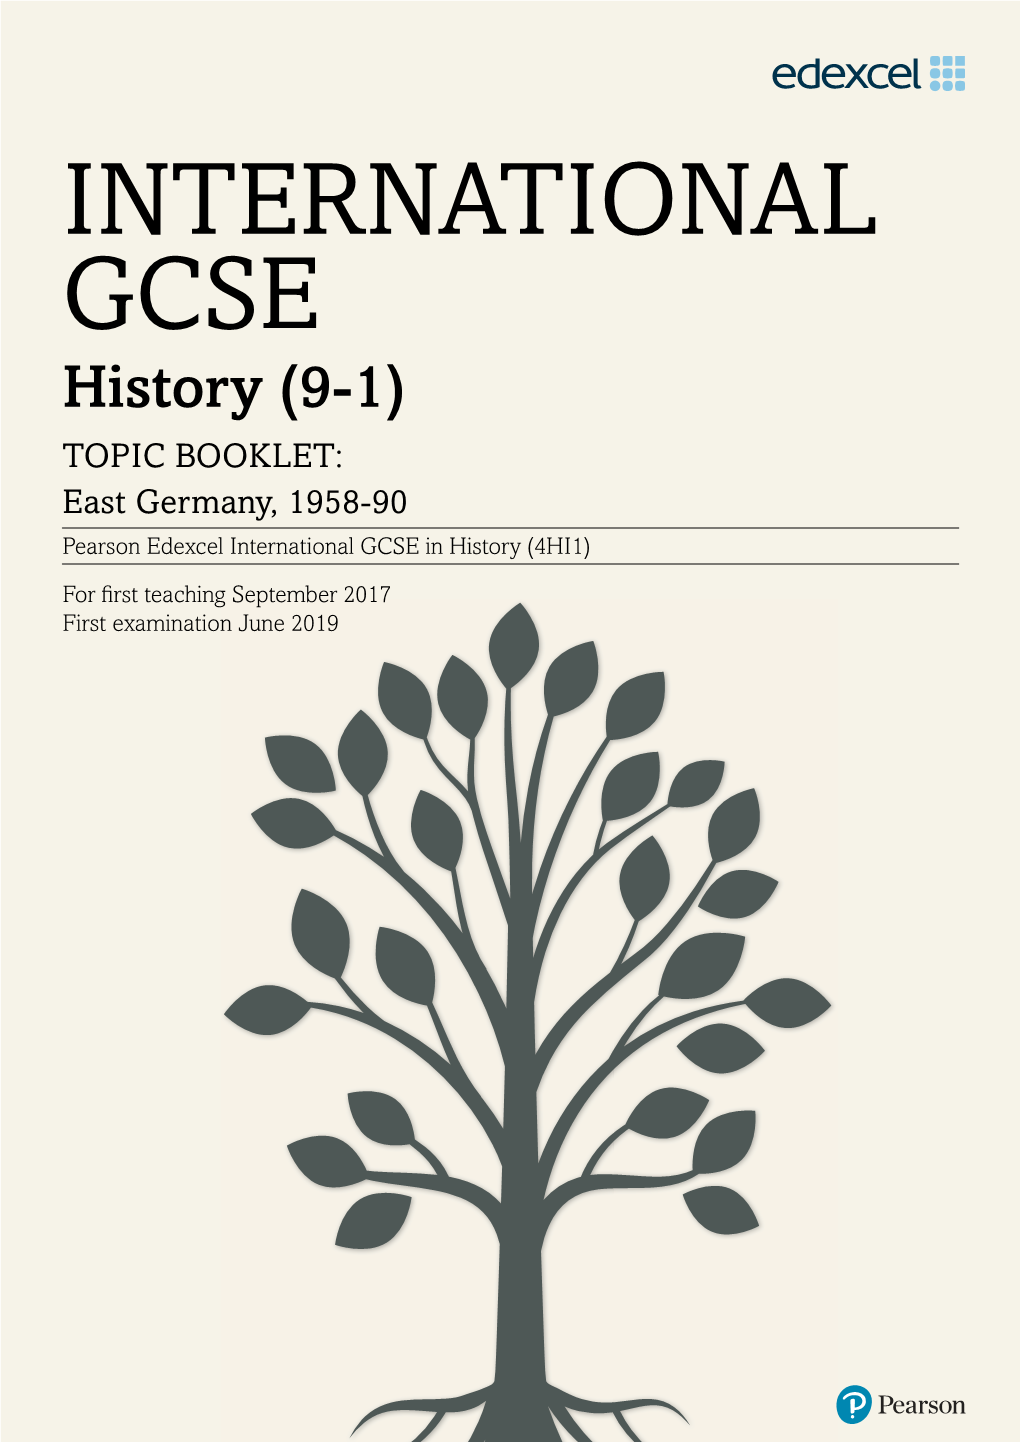 INTERNATIONAL GCSE History (9-1) TOPIC BOOKLET: East Germany, 1958-90 Pearson Edexcel International GCSE in History (4HI1)